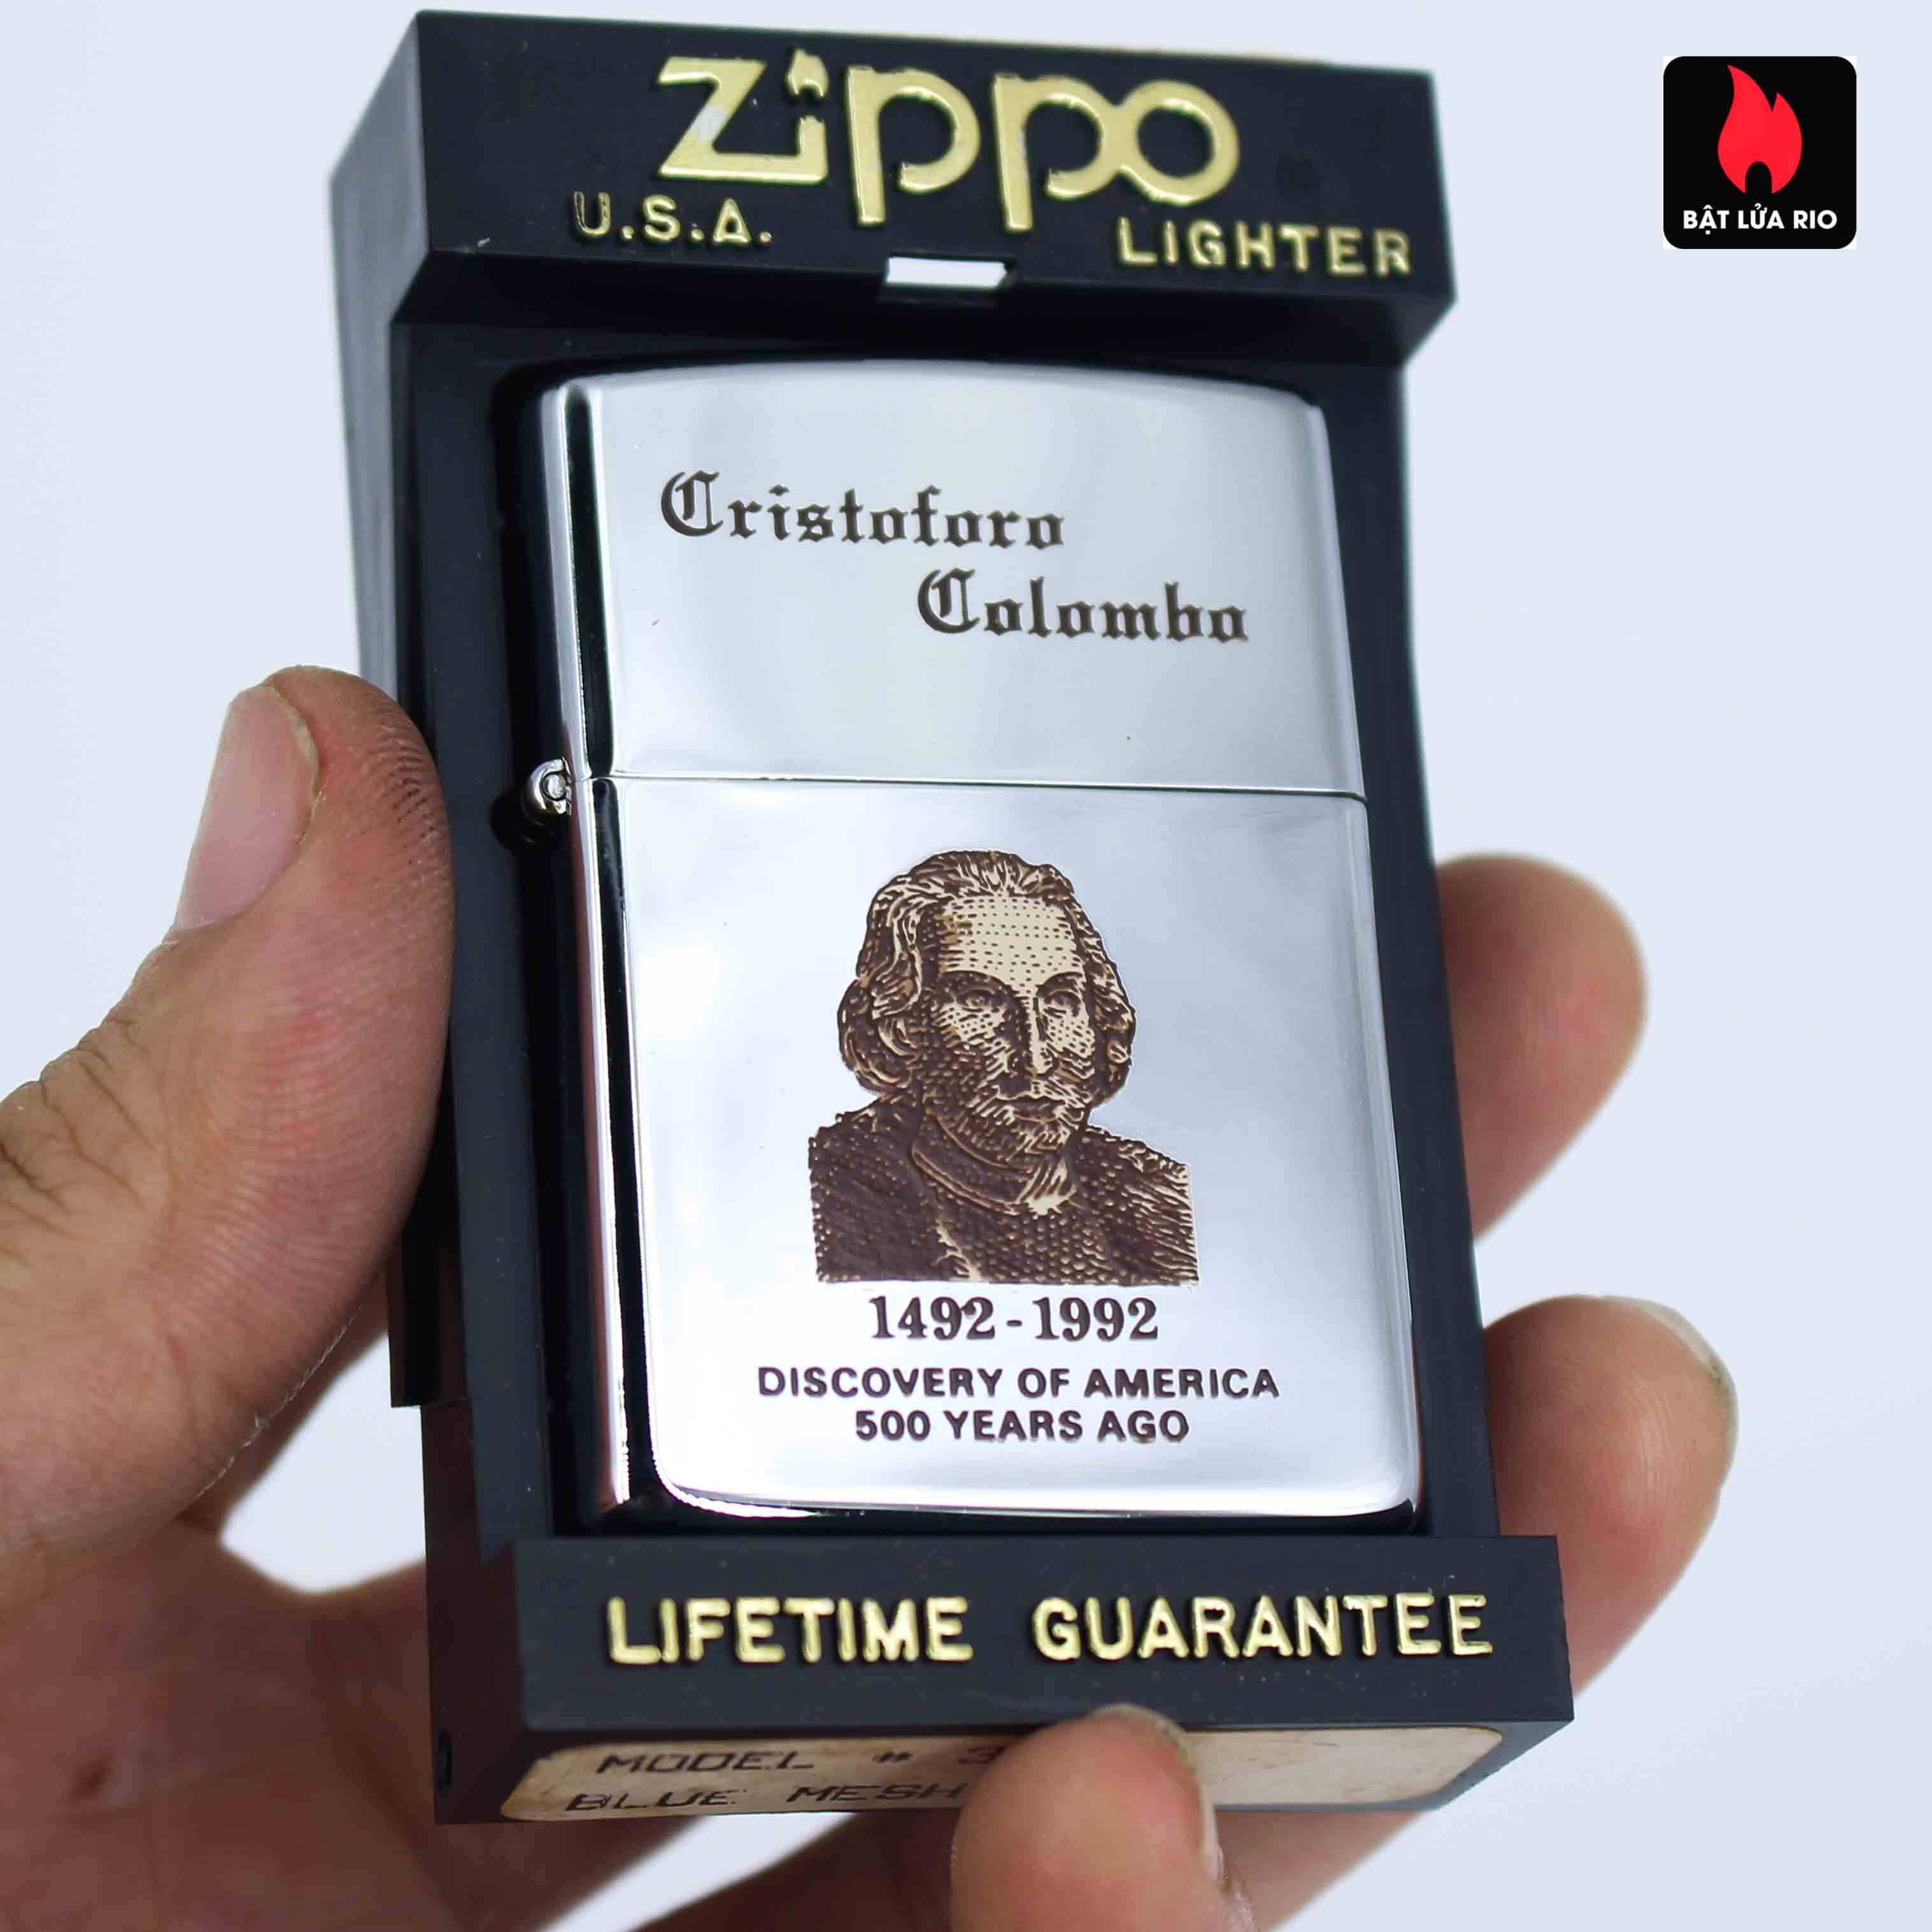 Zippo La Mã 1991 - Cristoforo Colombo 1492-1992 1